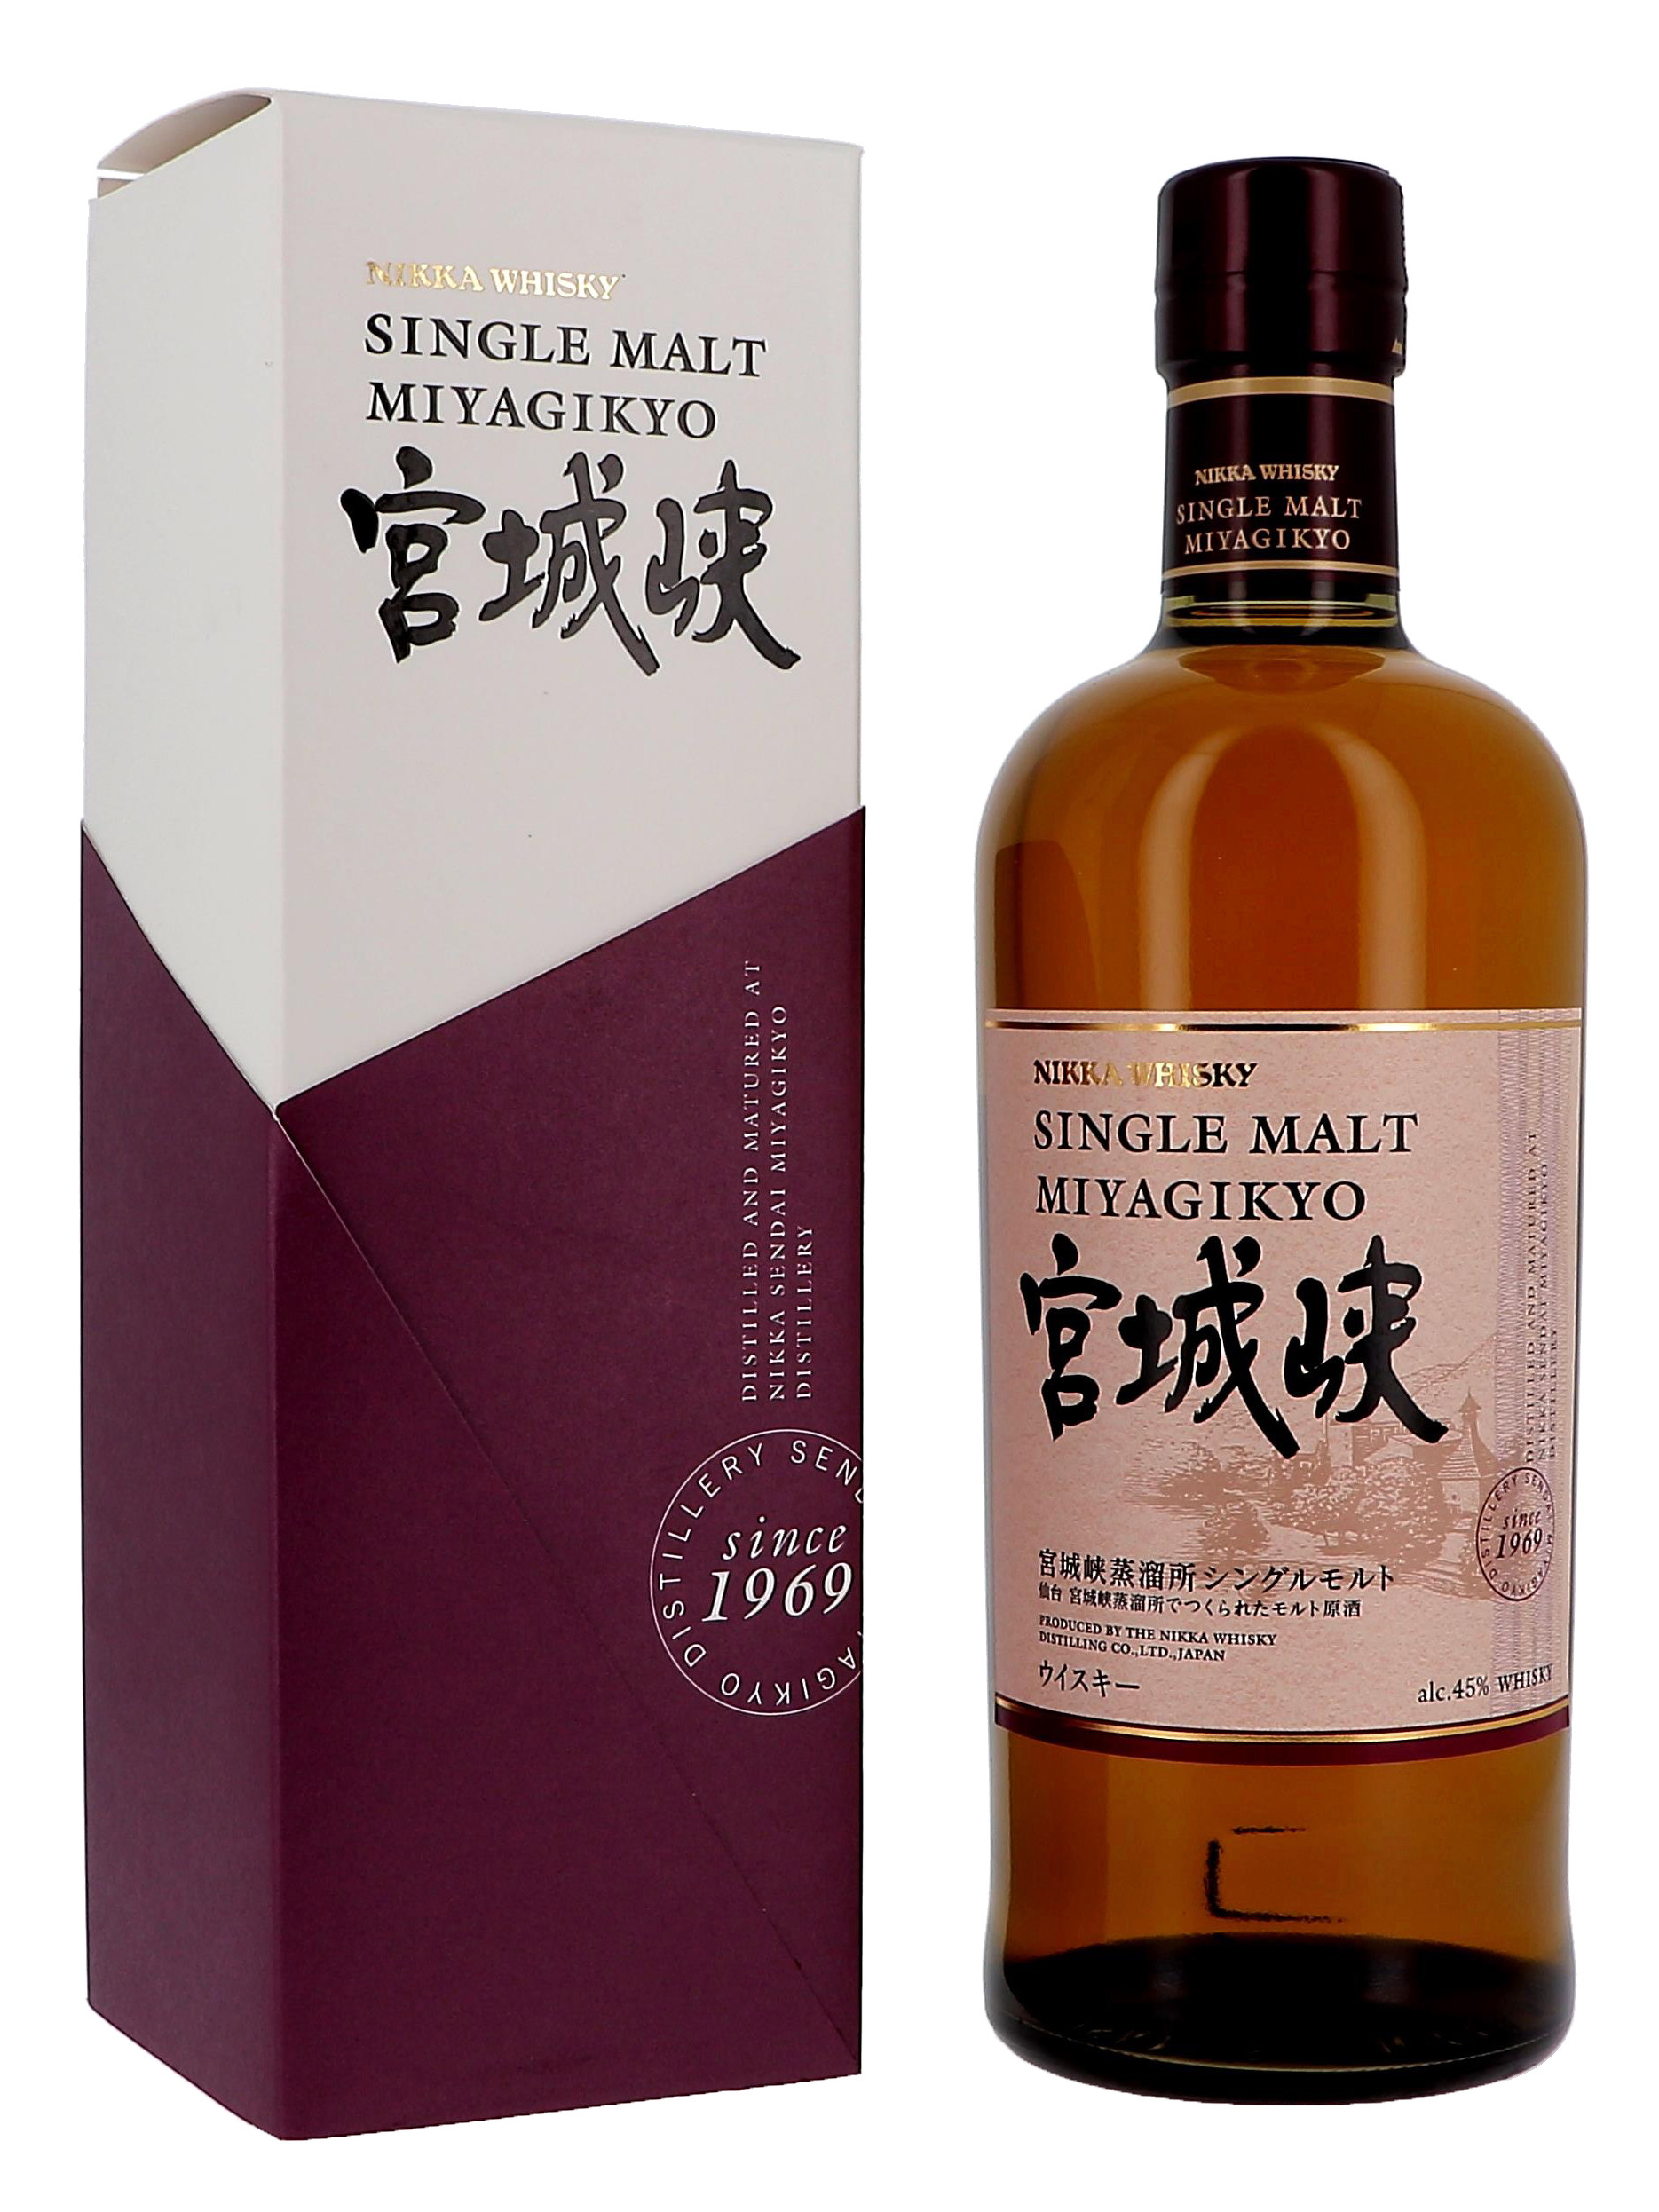 Yamazaki 10 Years 70cl 43% Japanese Malt Whisky 